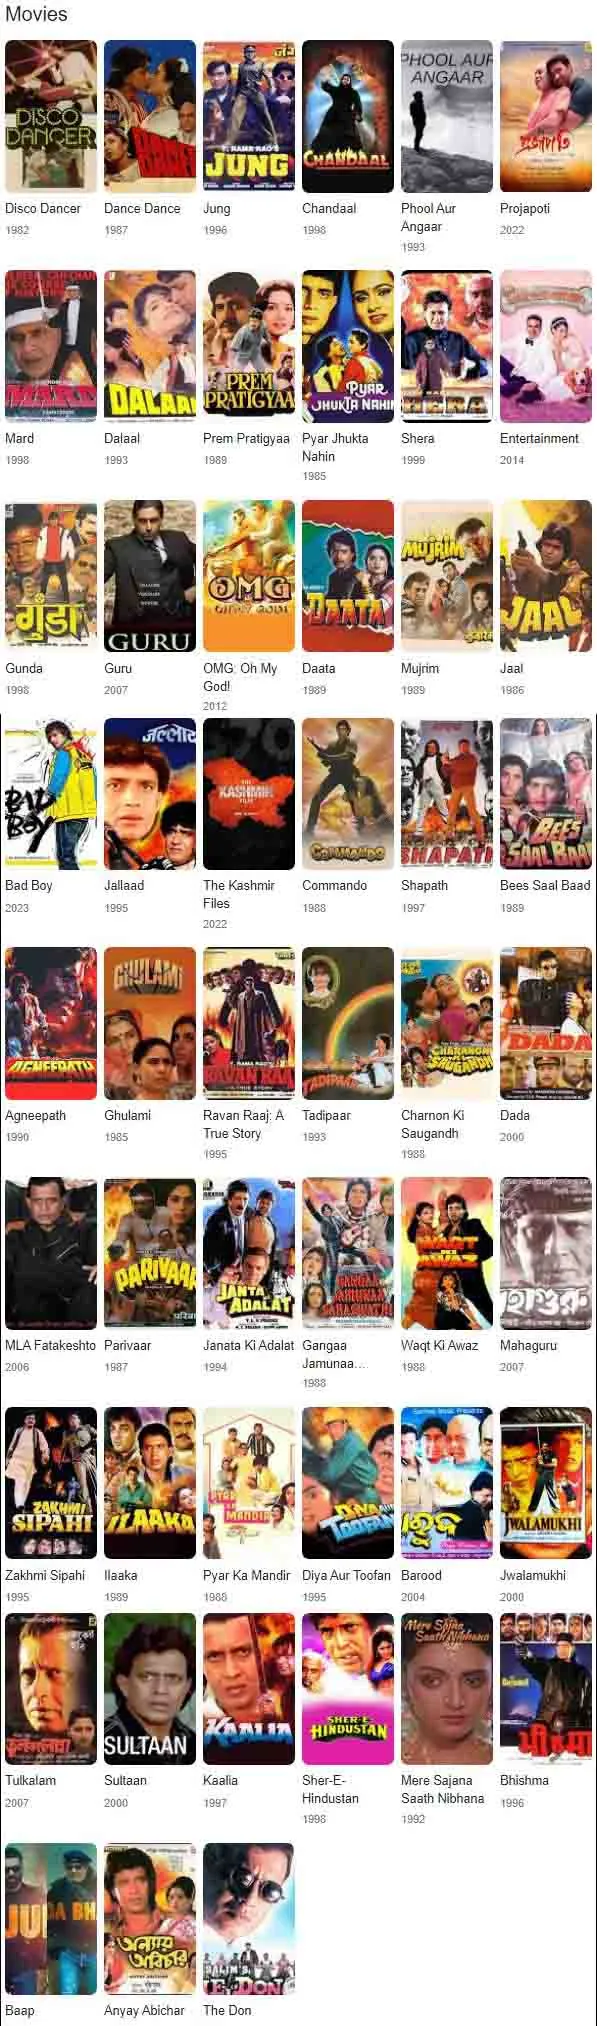 Mithun chakraborty movies collection